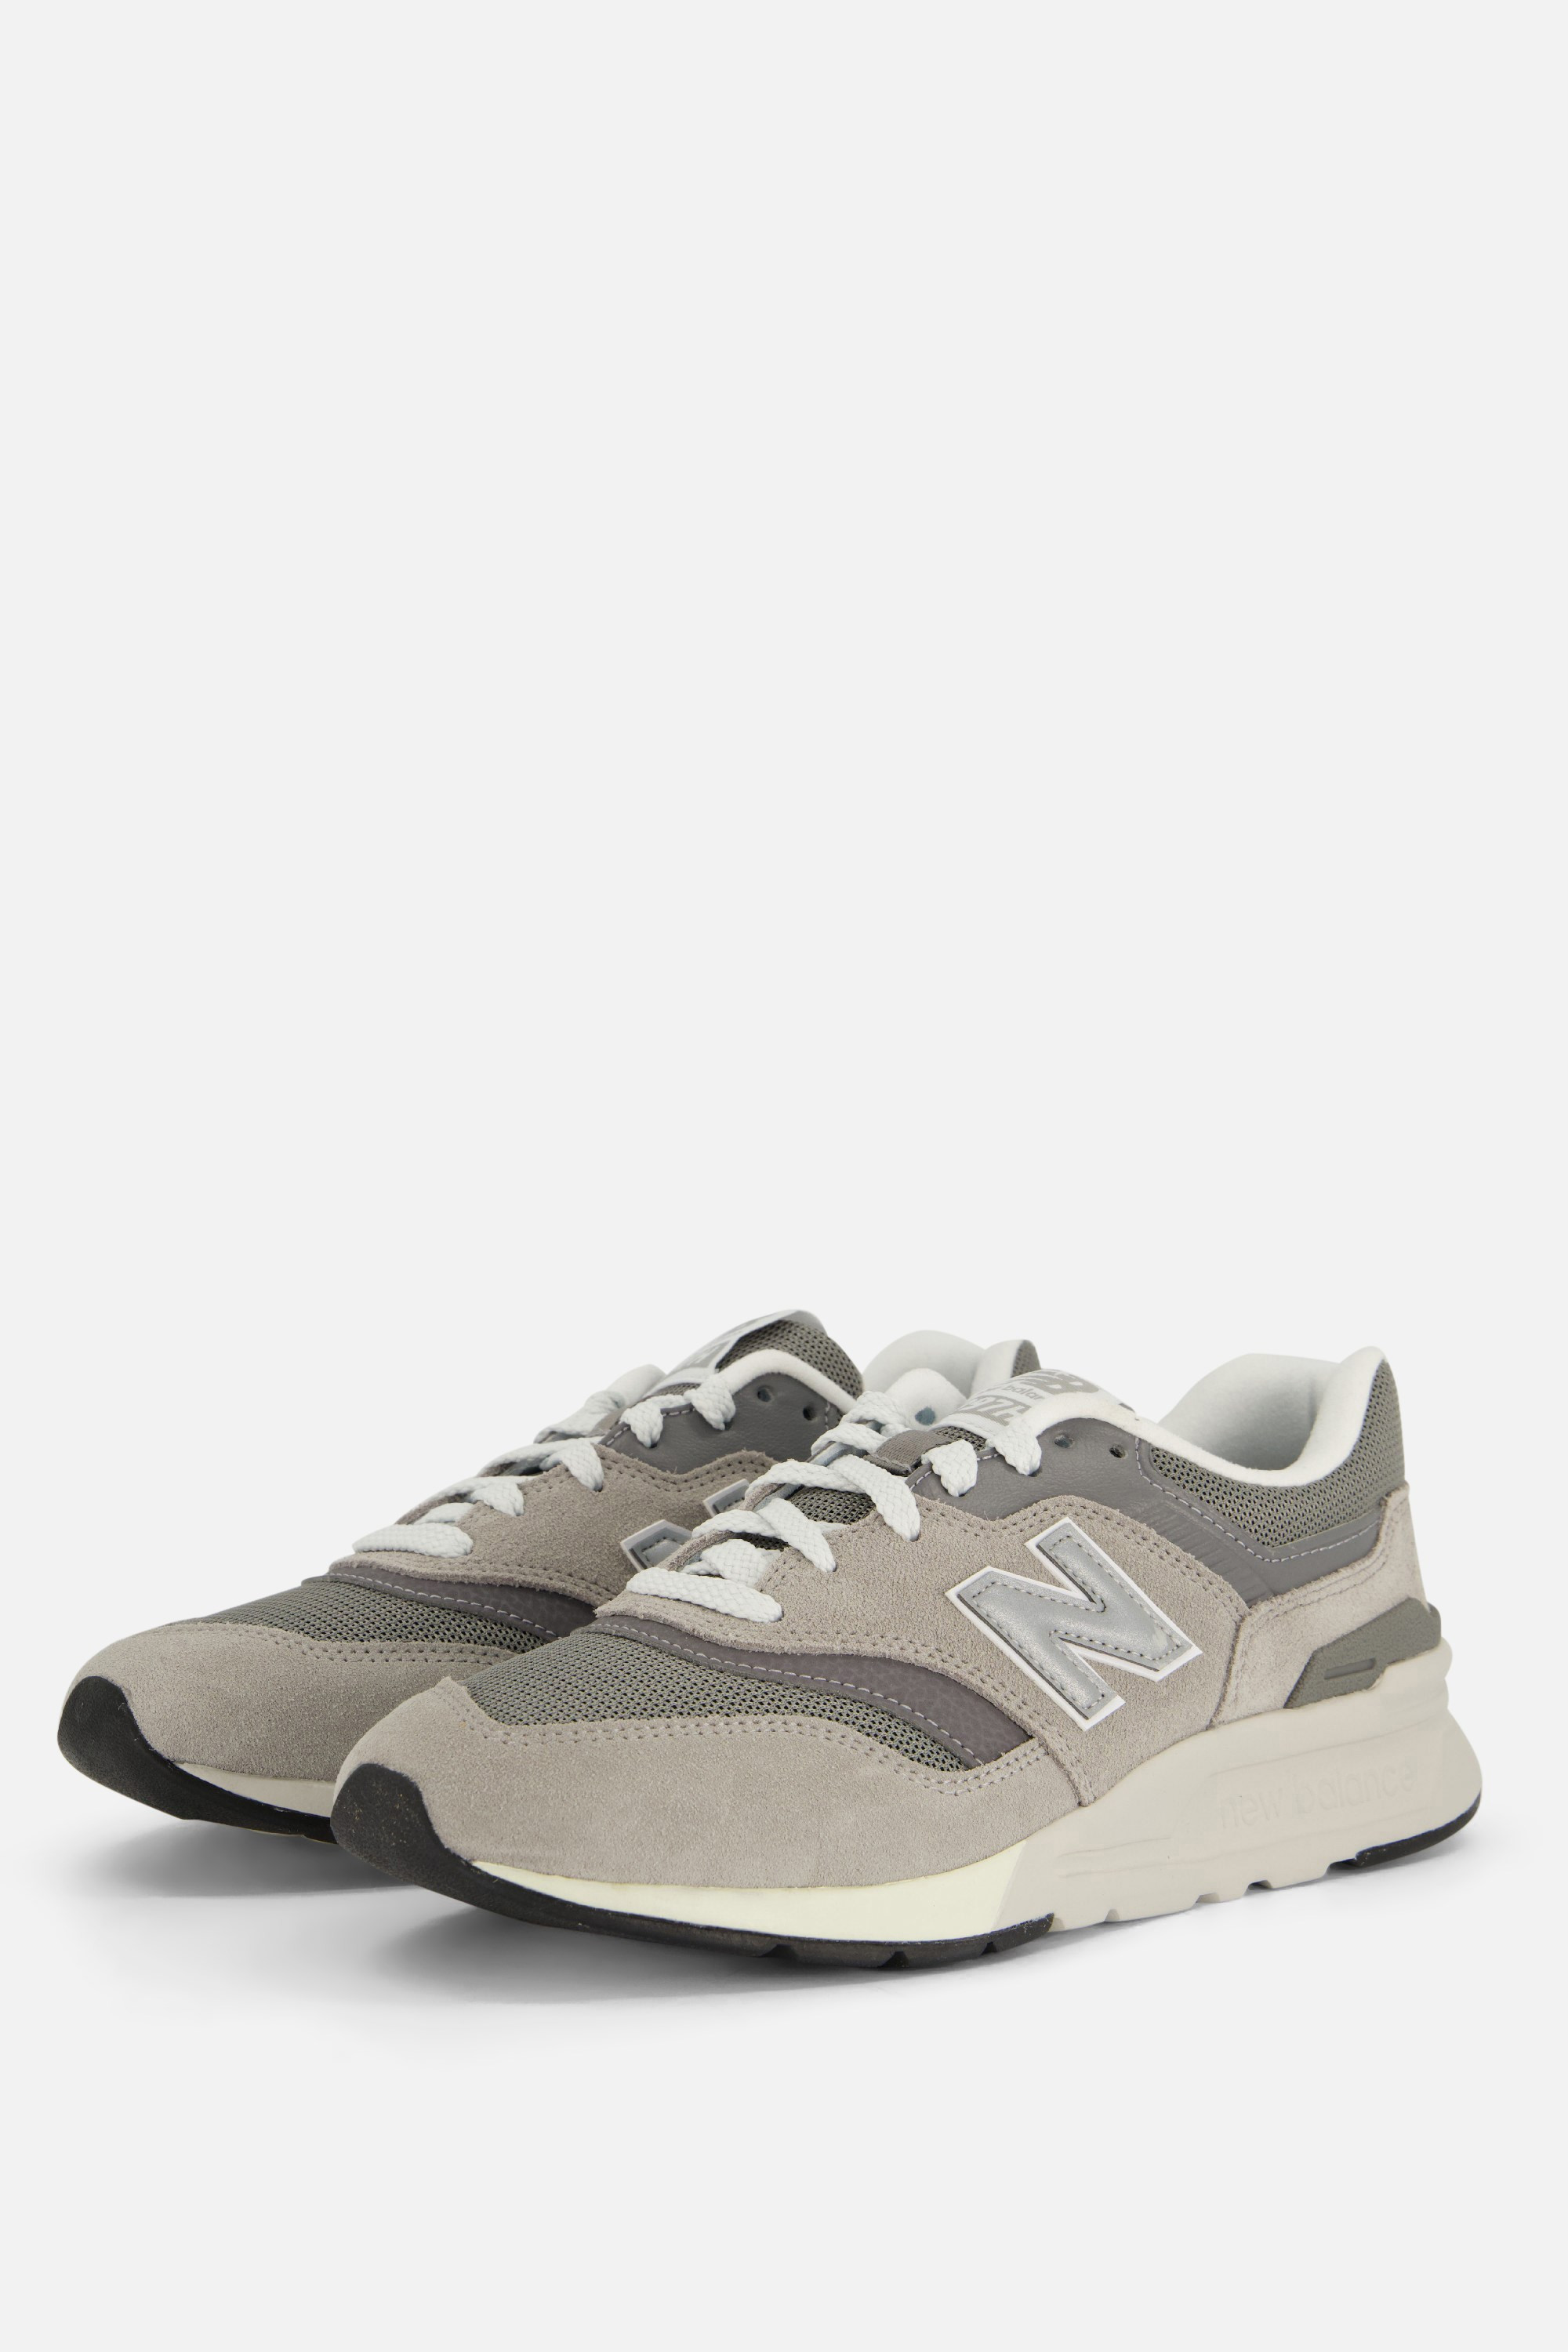 New Balance New Balance 997 Running Sneakers grijs Suede